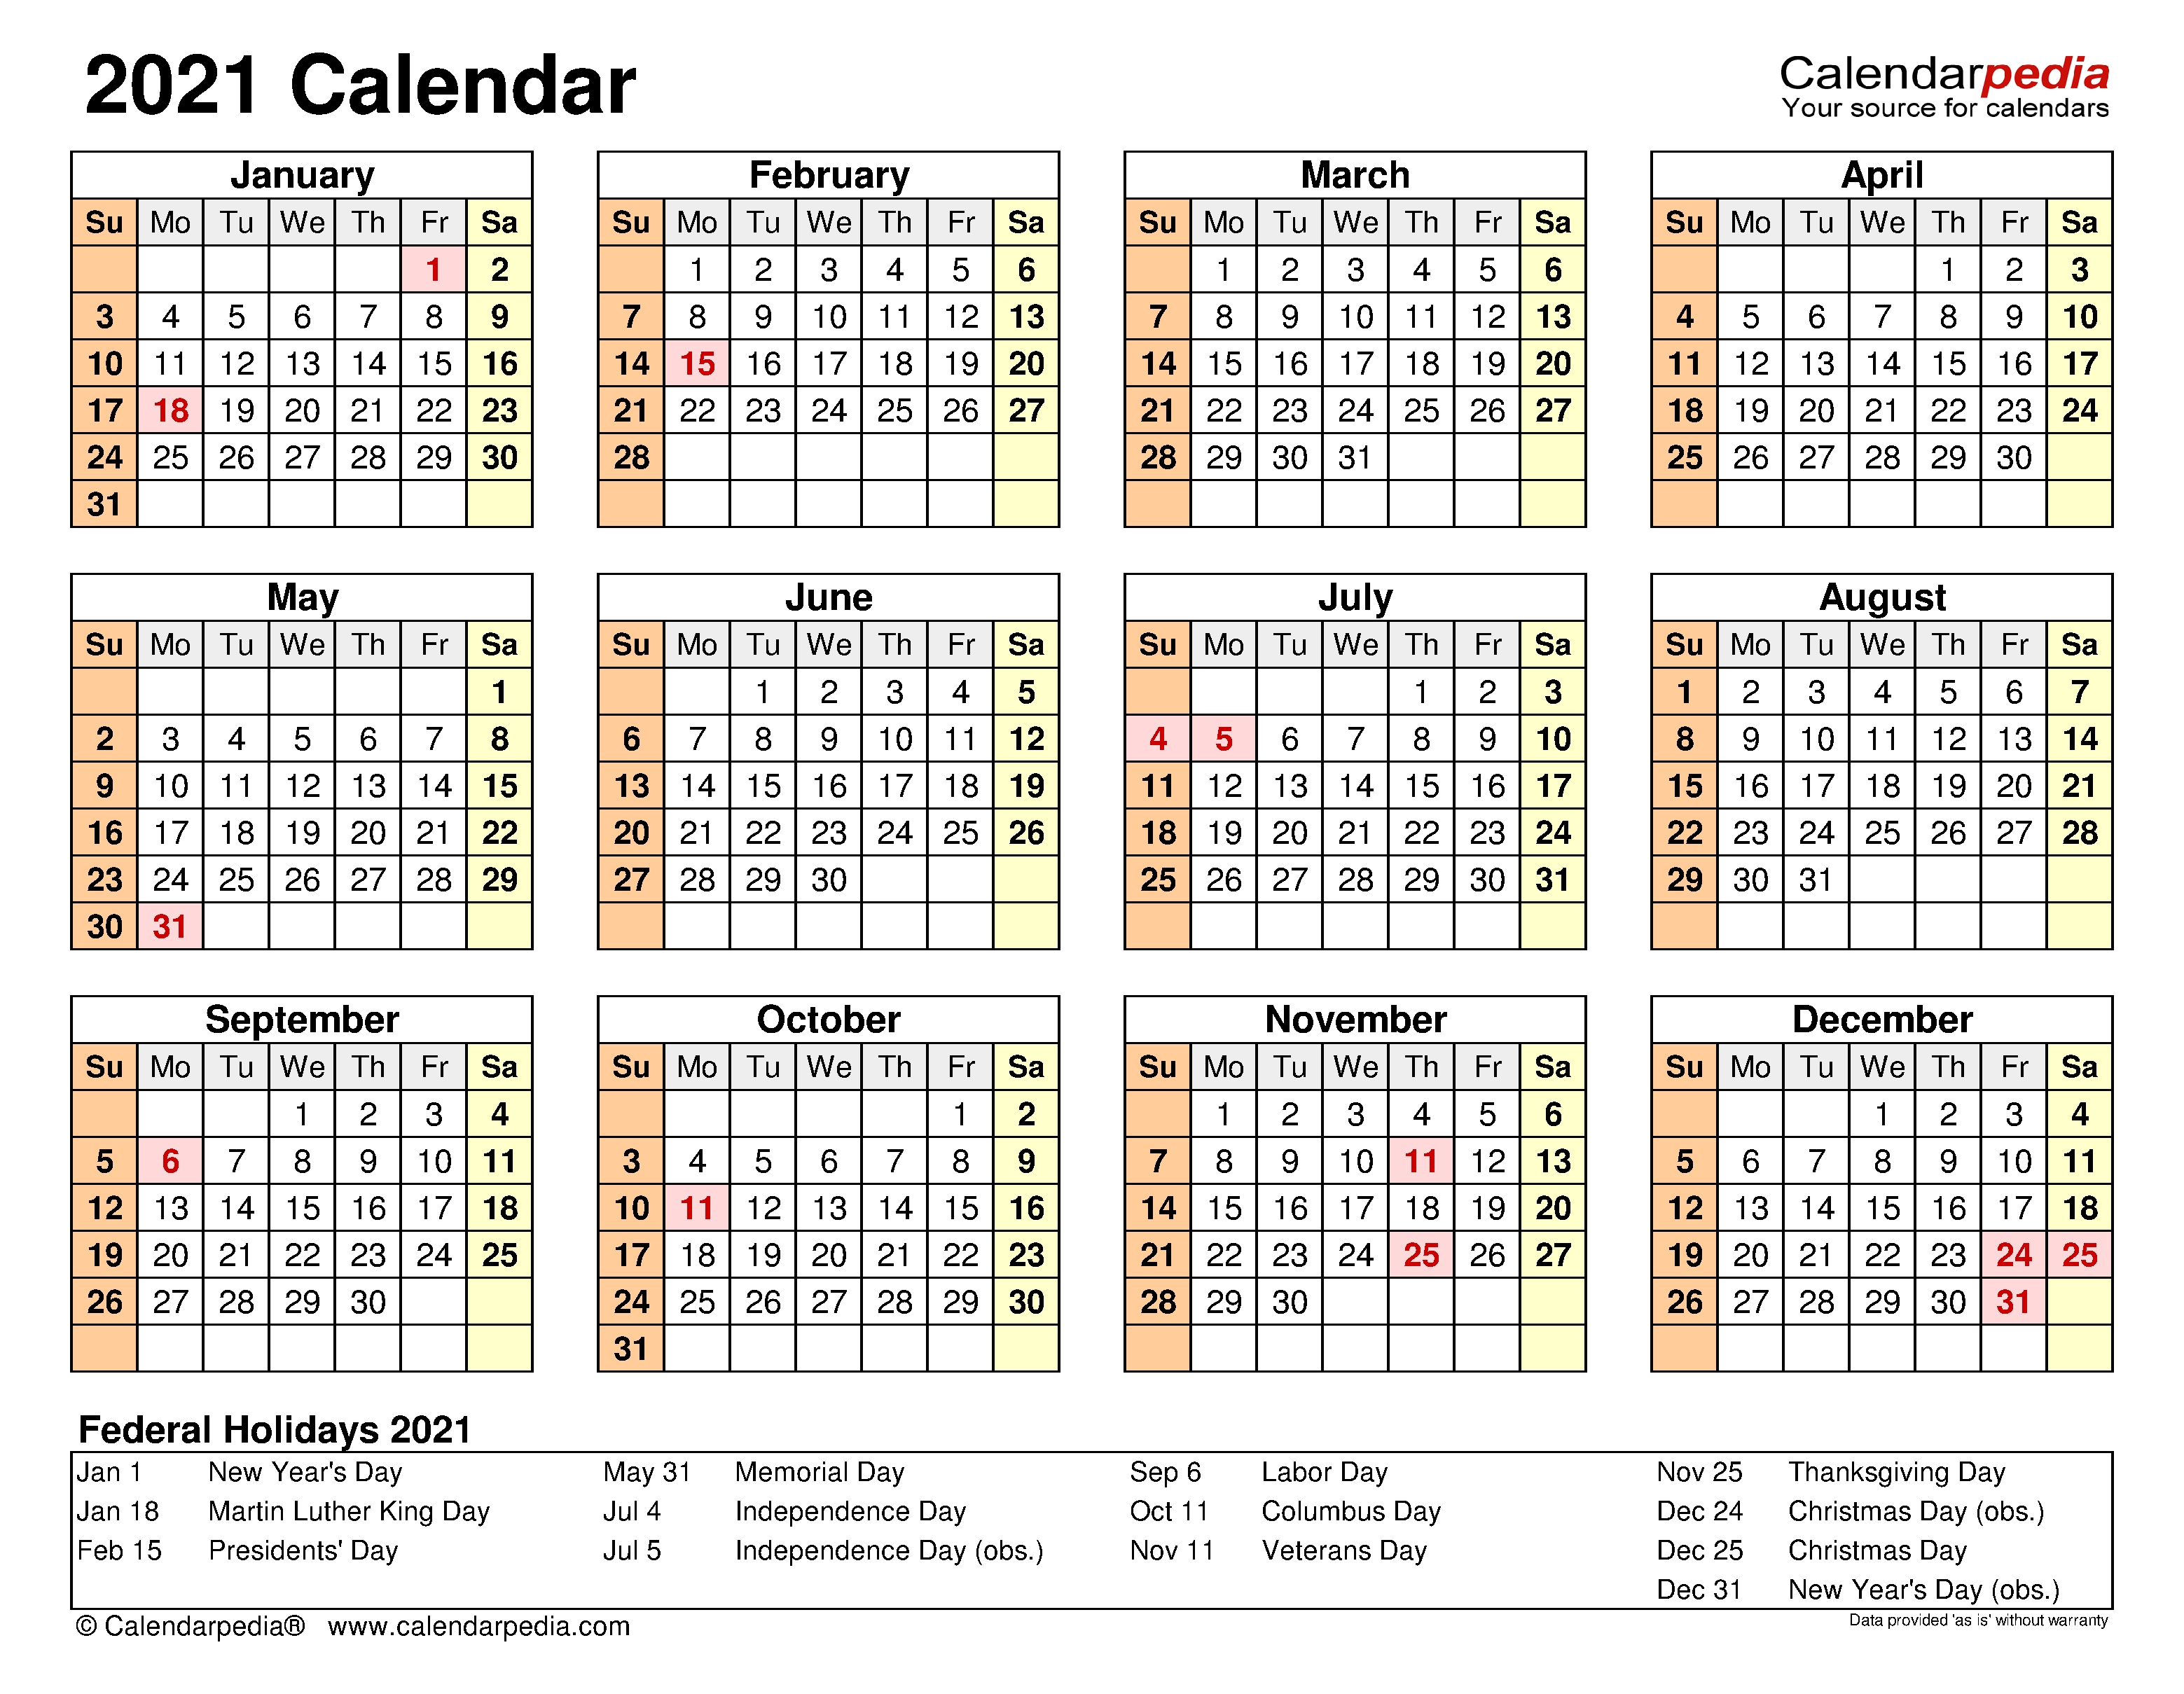 2021 Calendar - Free Printable Excel Templates - Calendarpedia 2021 Myanmar Calendar Microsoft Office